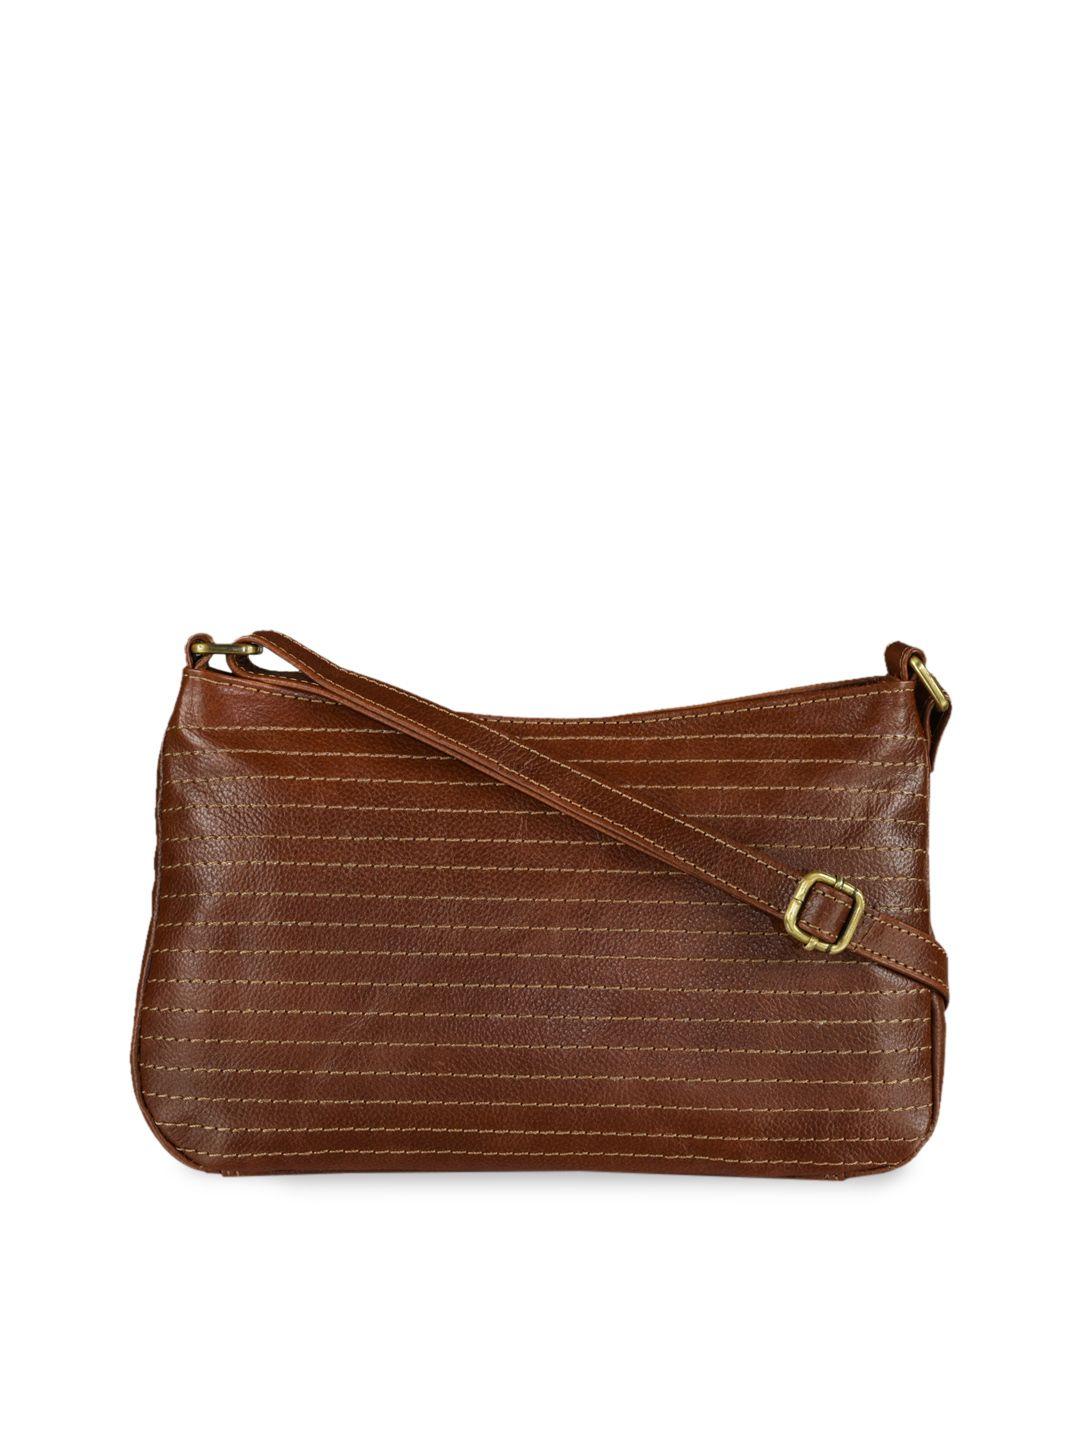 mai soli women tan brown textured leather sling bag